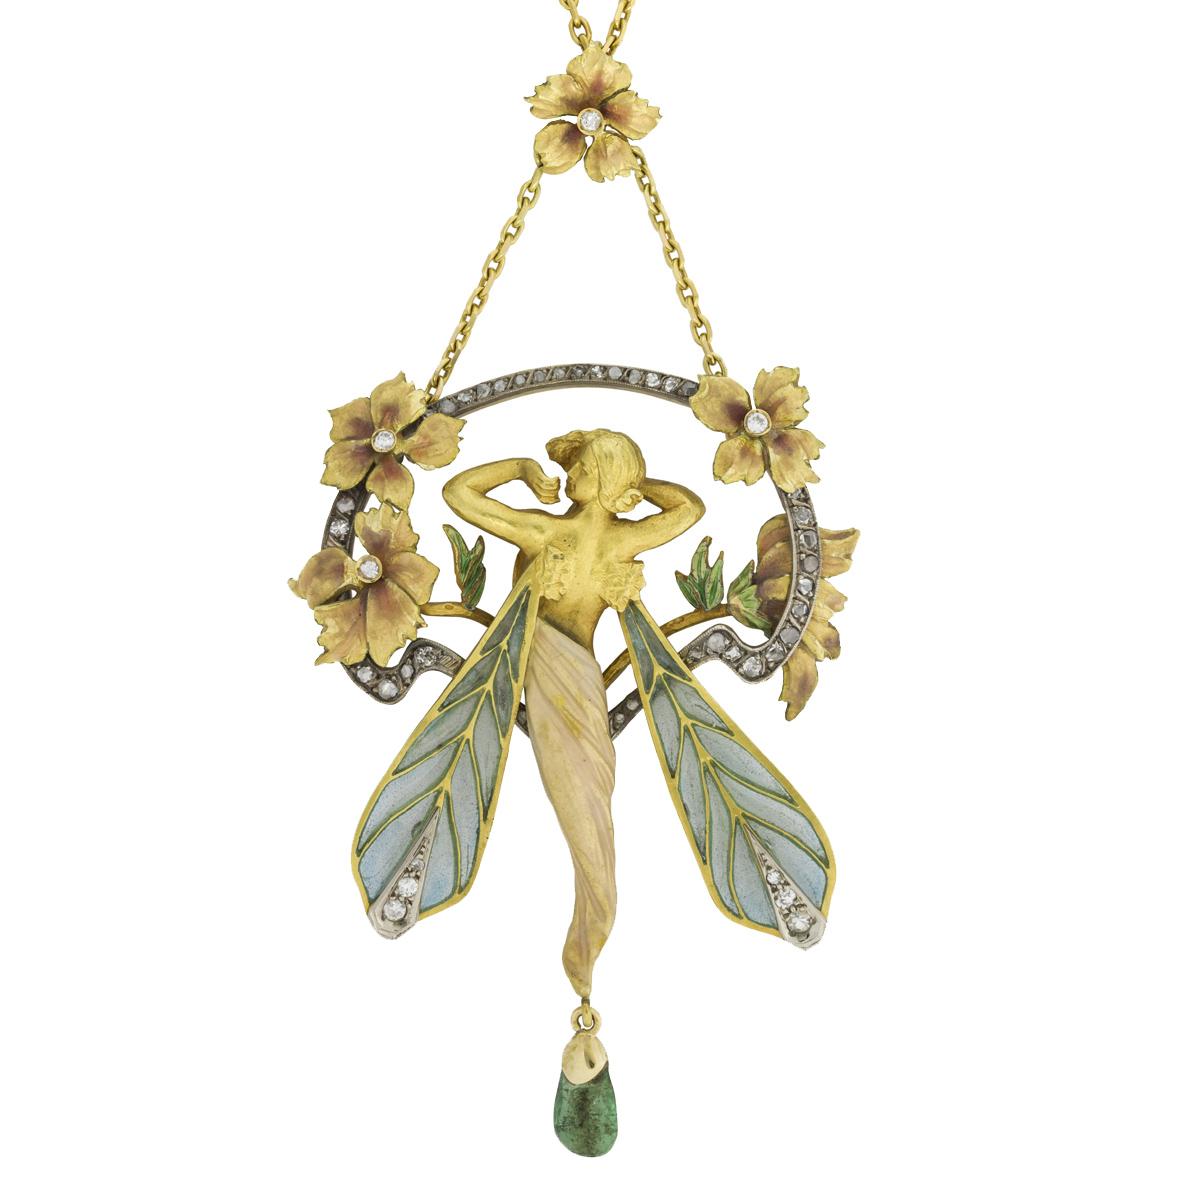 An Art Nouveau Enamel, Emerald and Diamond Pendant by Masriera y Carreras, Circa 1915